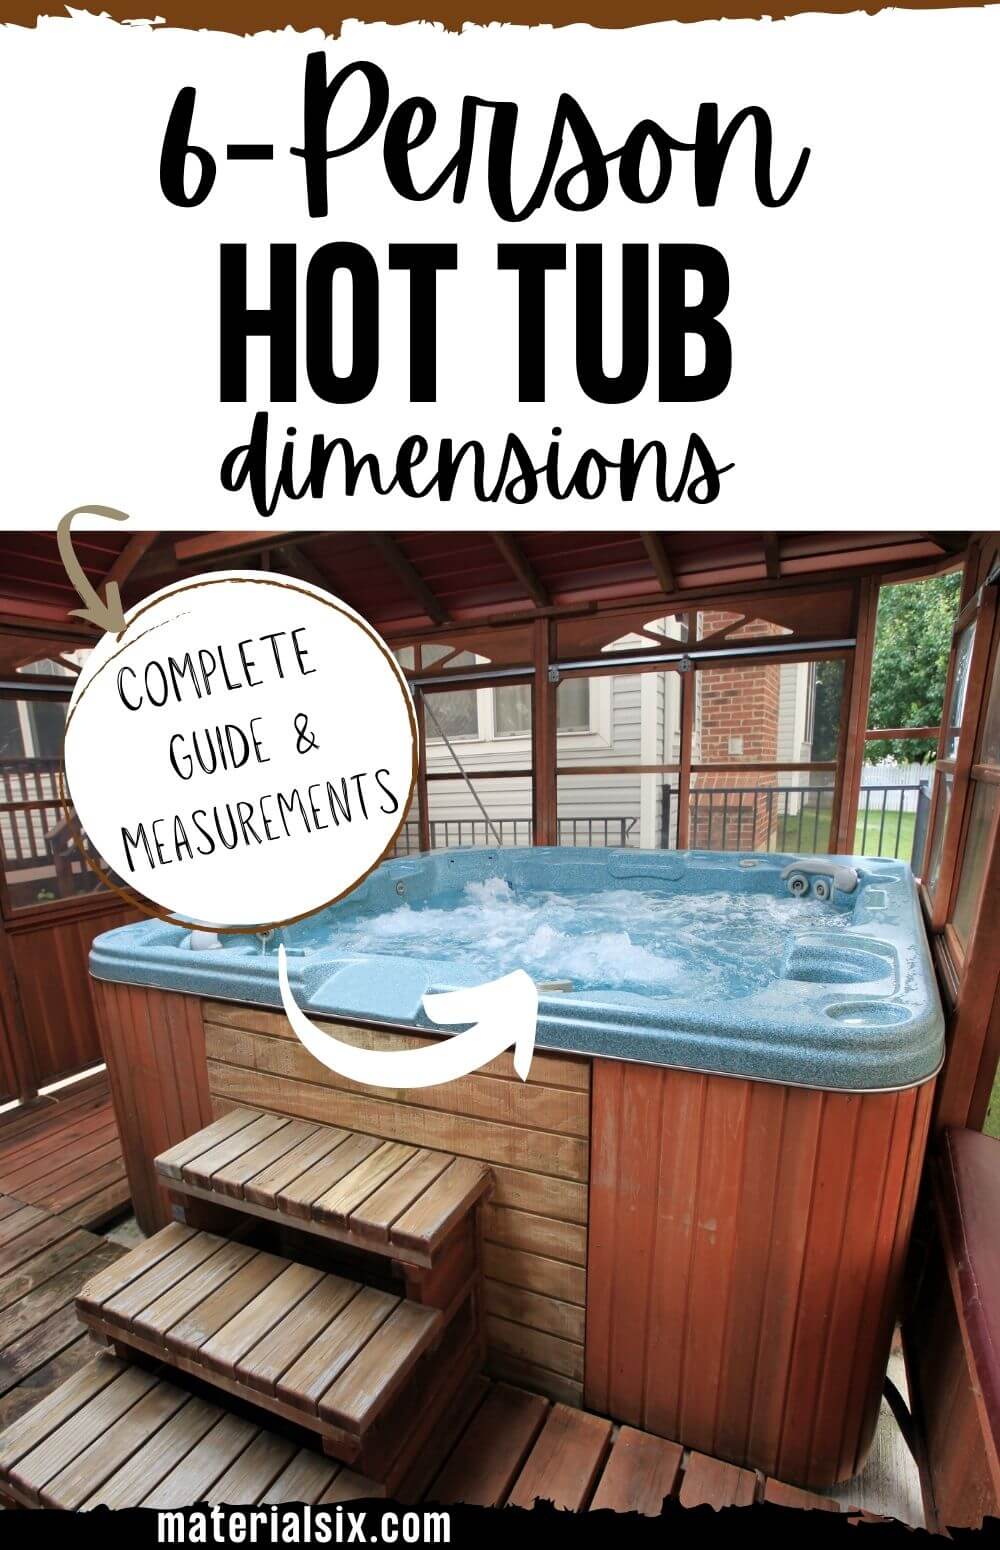 Hot Tub Dimensions (6-person) Complete Guide & Measurements